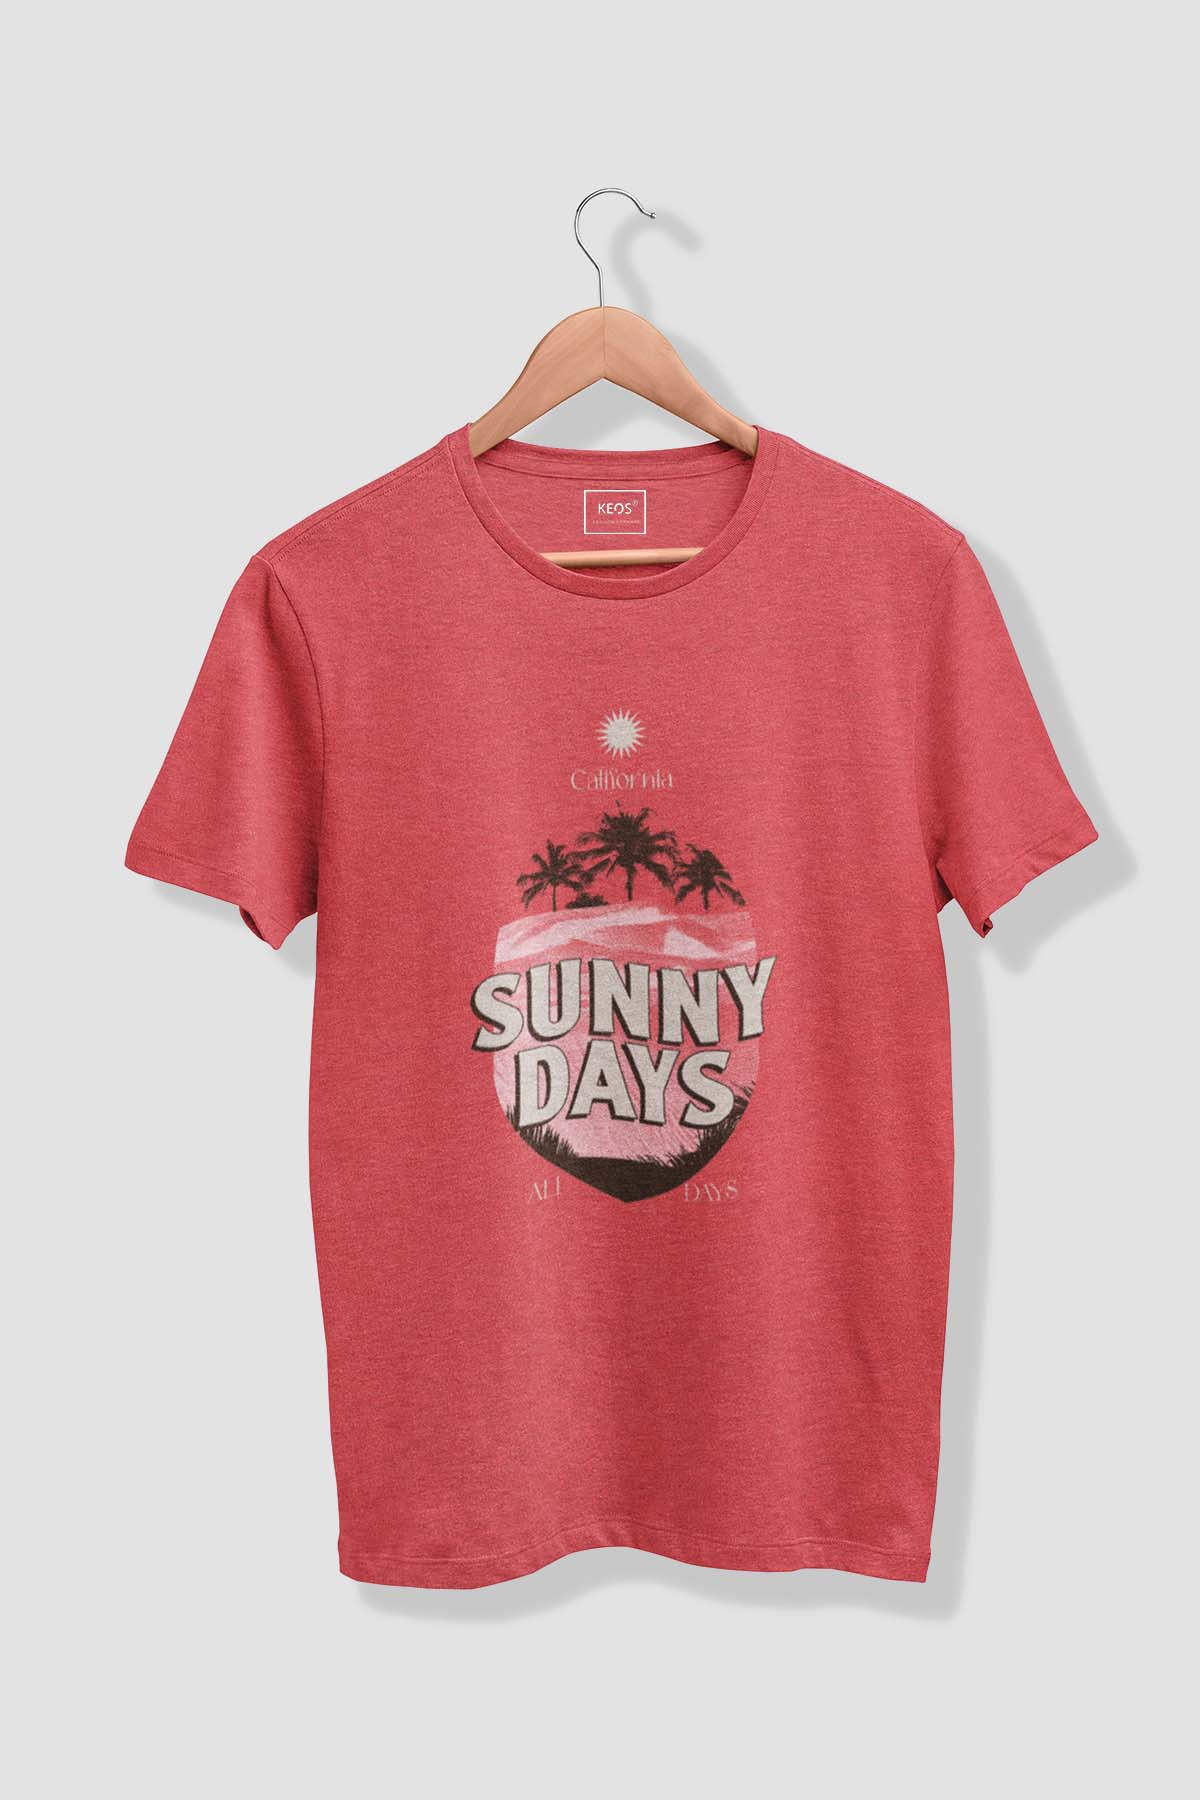 California Sunny Days - Melange Cotton T-shirt - keos.life